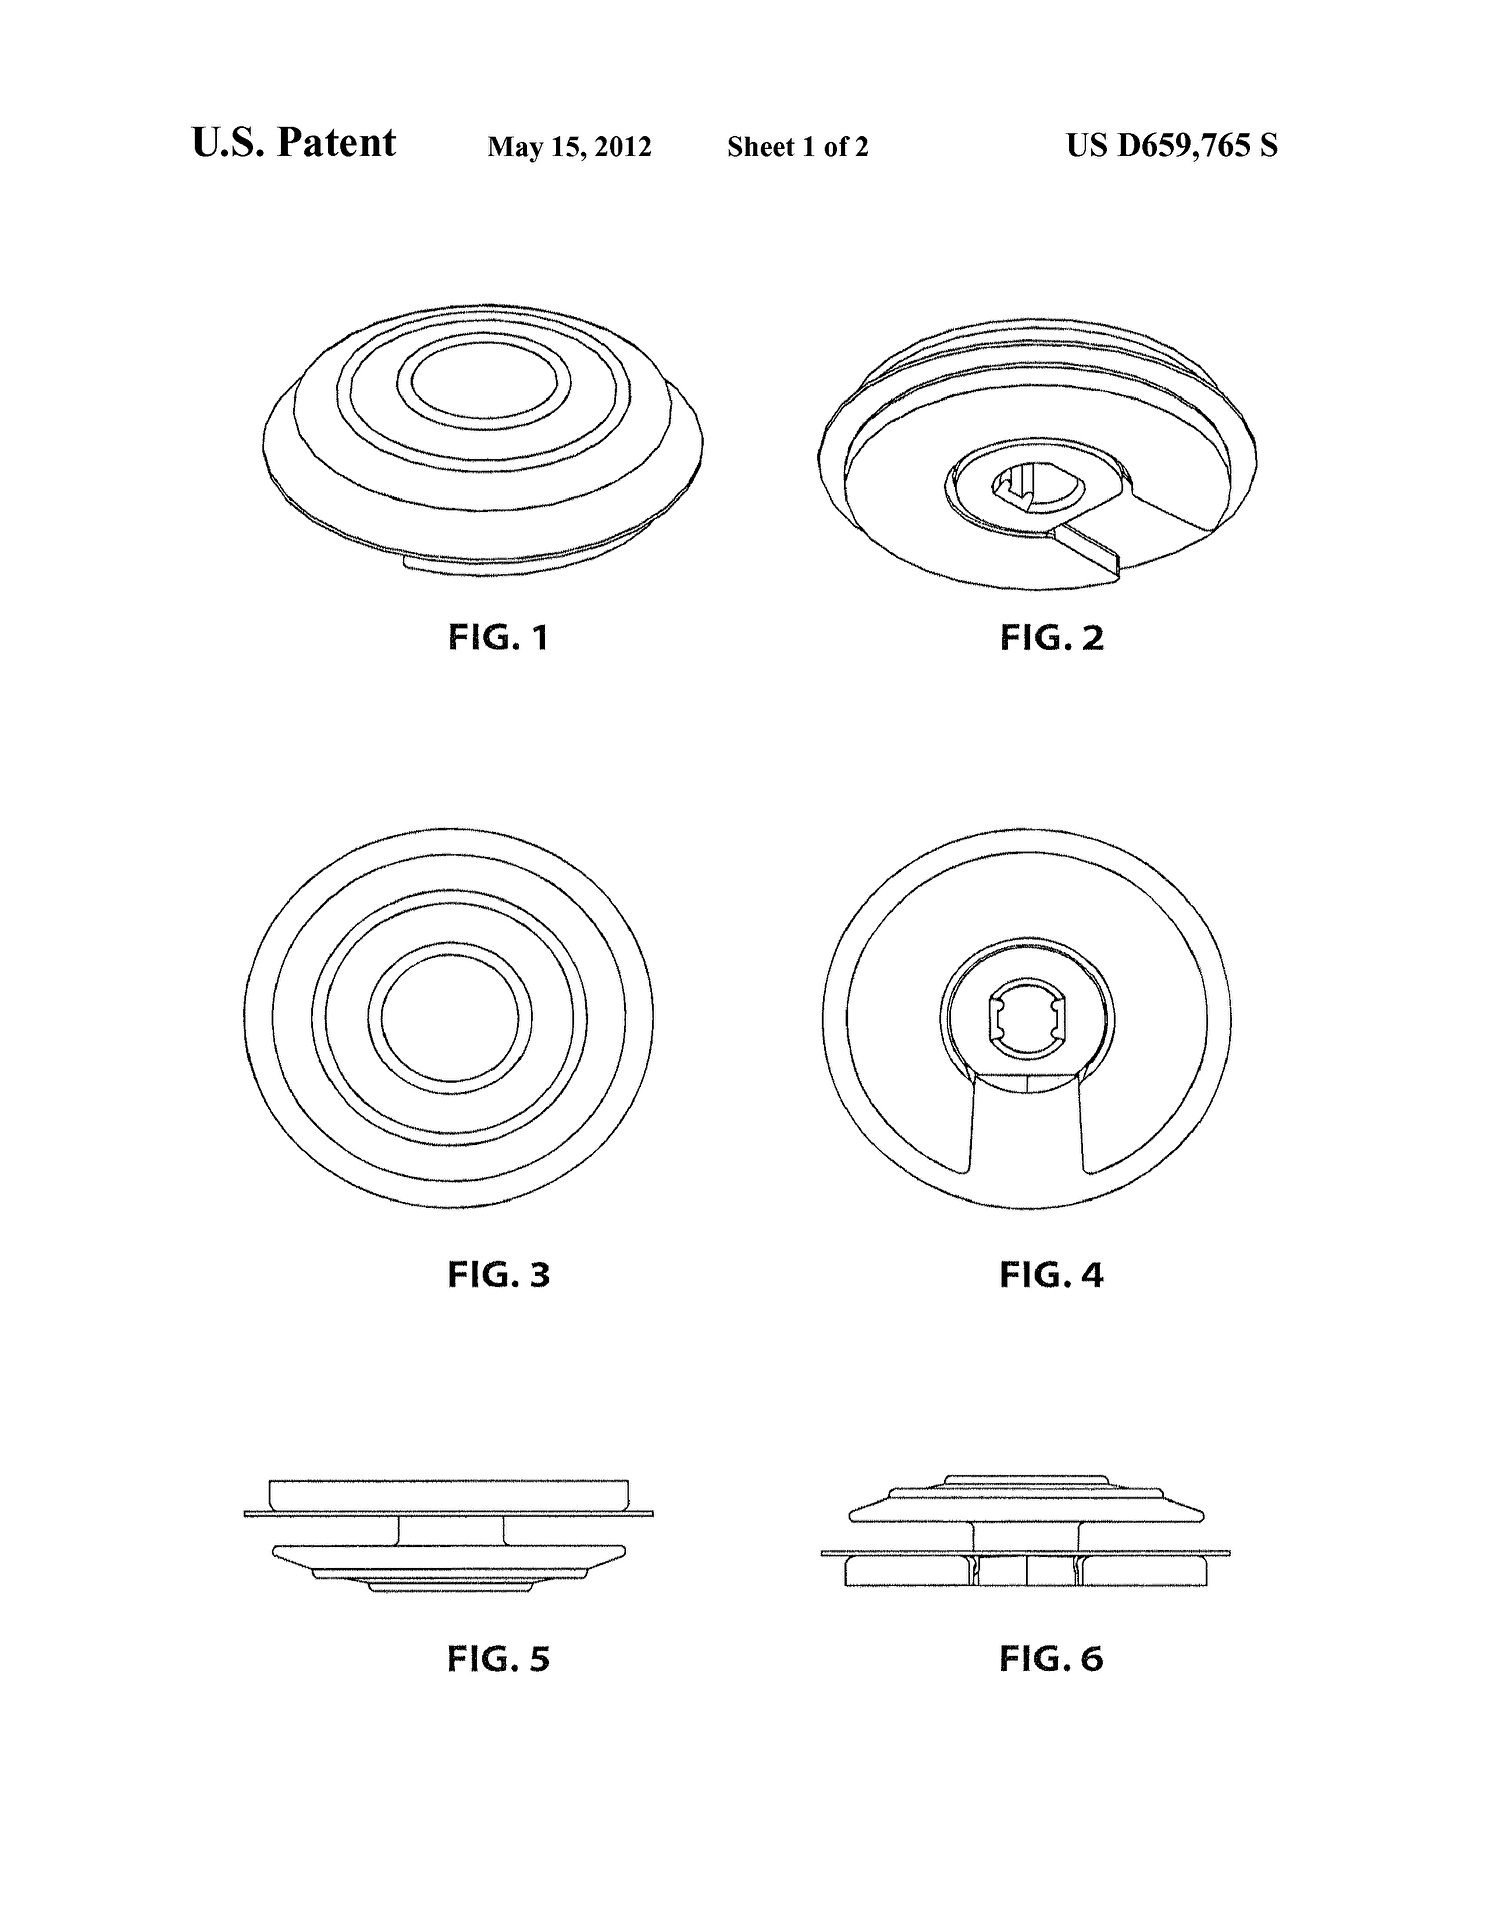 Nintendo Patents New Circle Pad Design - News - Nintendo World Report